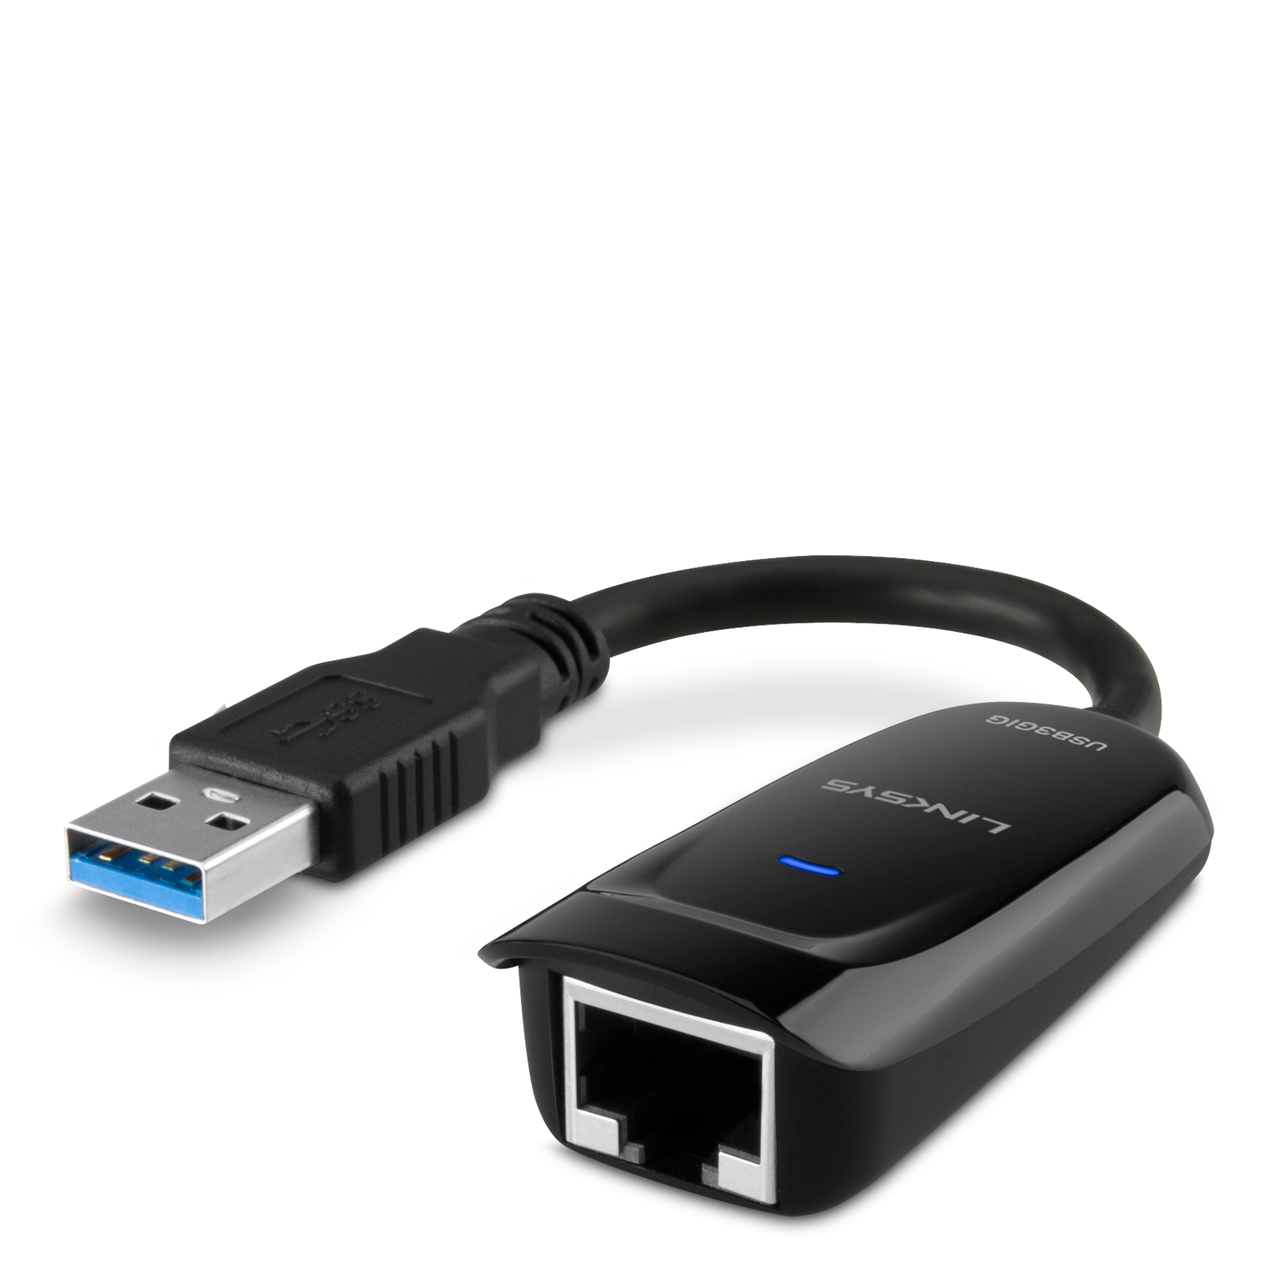 uitroepen Beukende Trojaanse paard Linksys USB3GIG USB 3.0 Gigabit Ethernet Adapter | Linksys: US